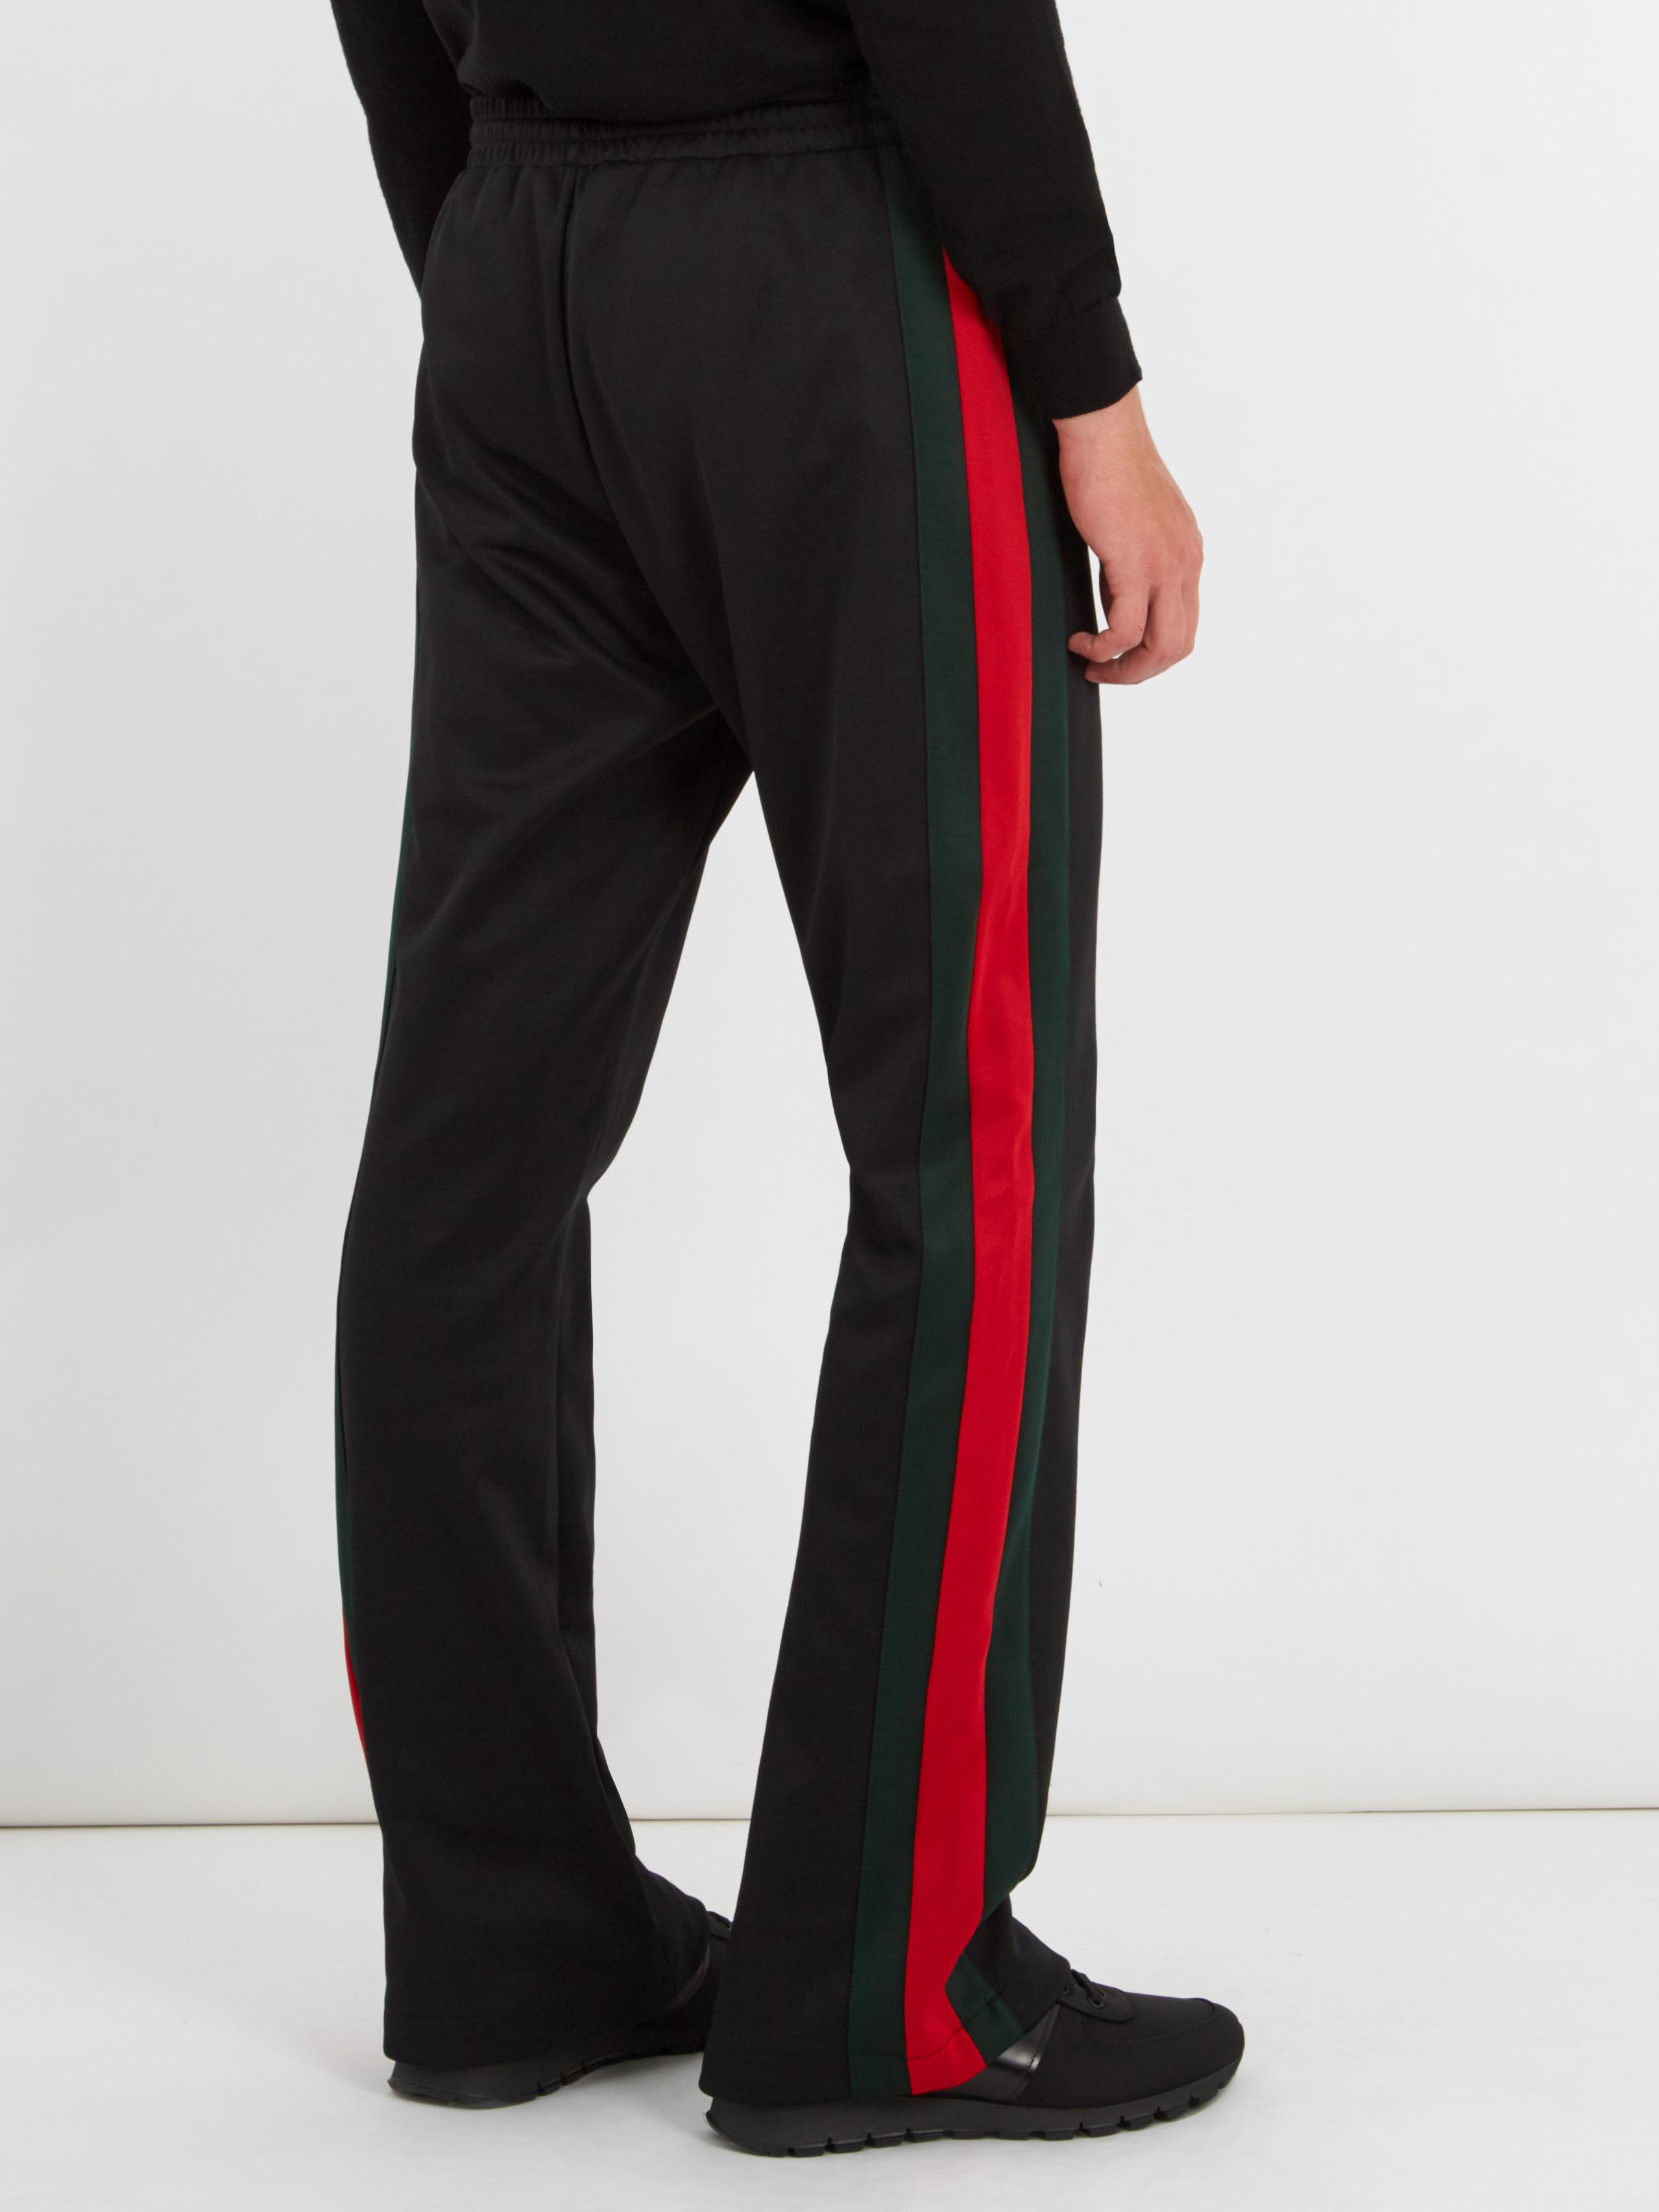 Top more than 78 gucci stripe trousers best - in.coedo.com.vn